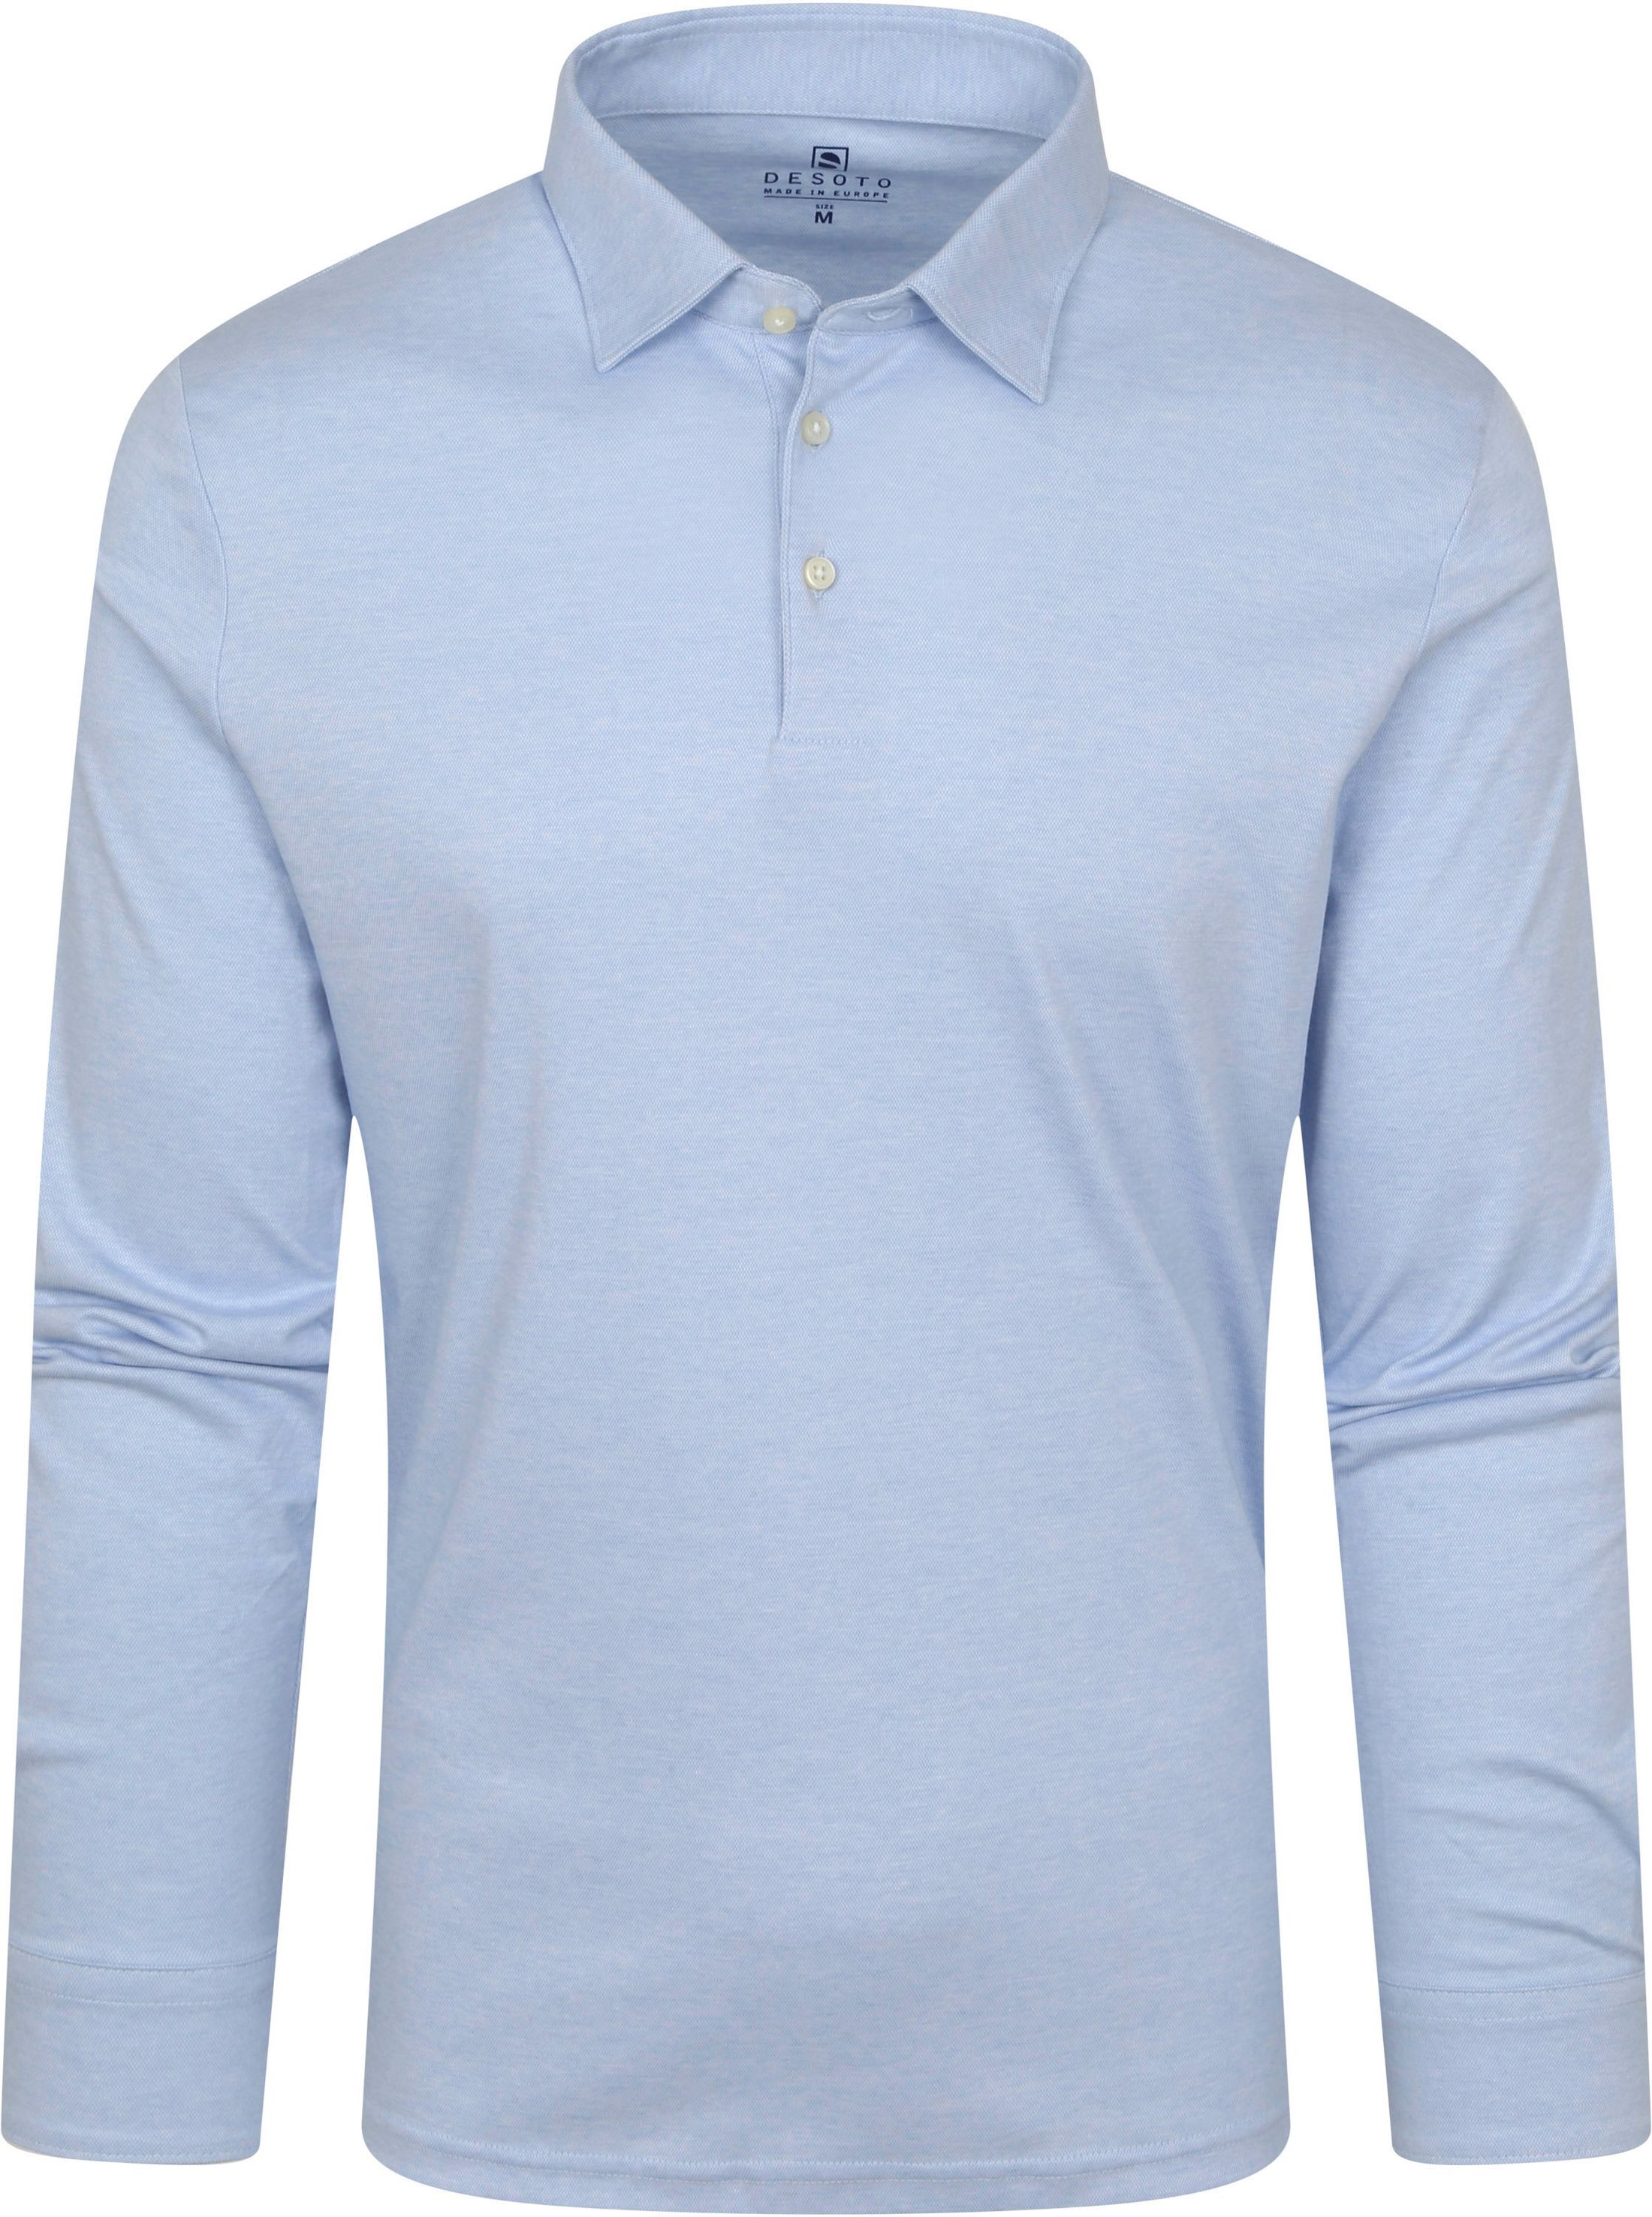 Desoto Polo Shirt LS Light Light blue Blue size L